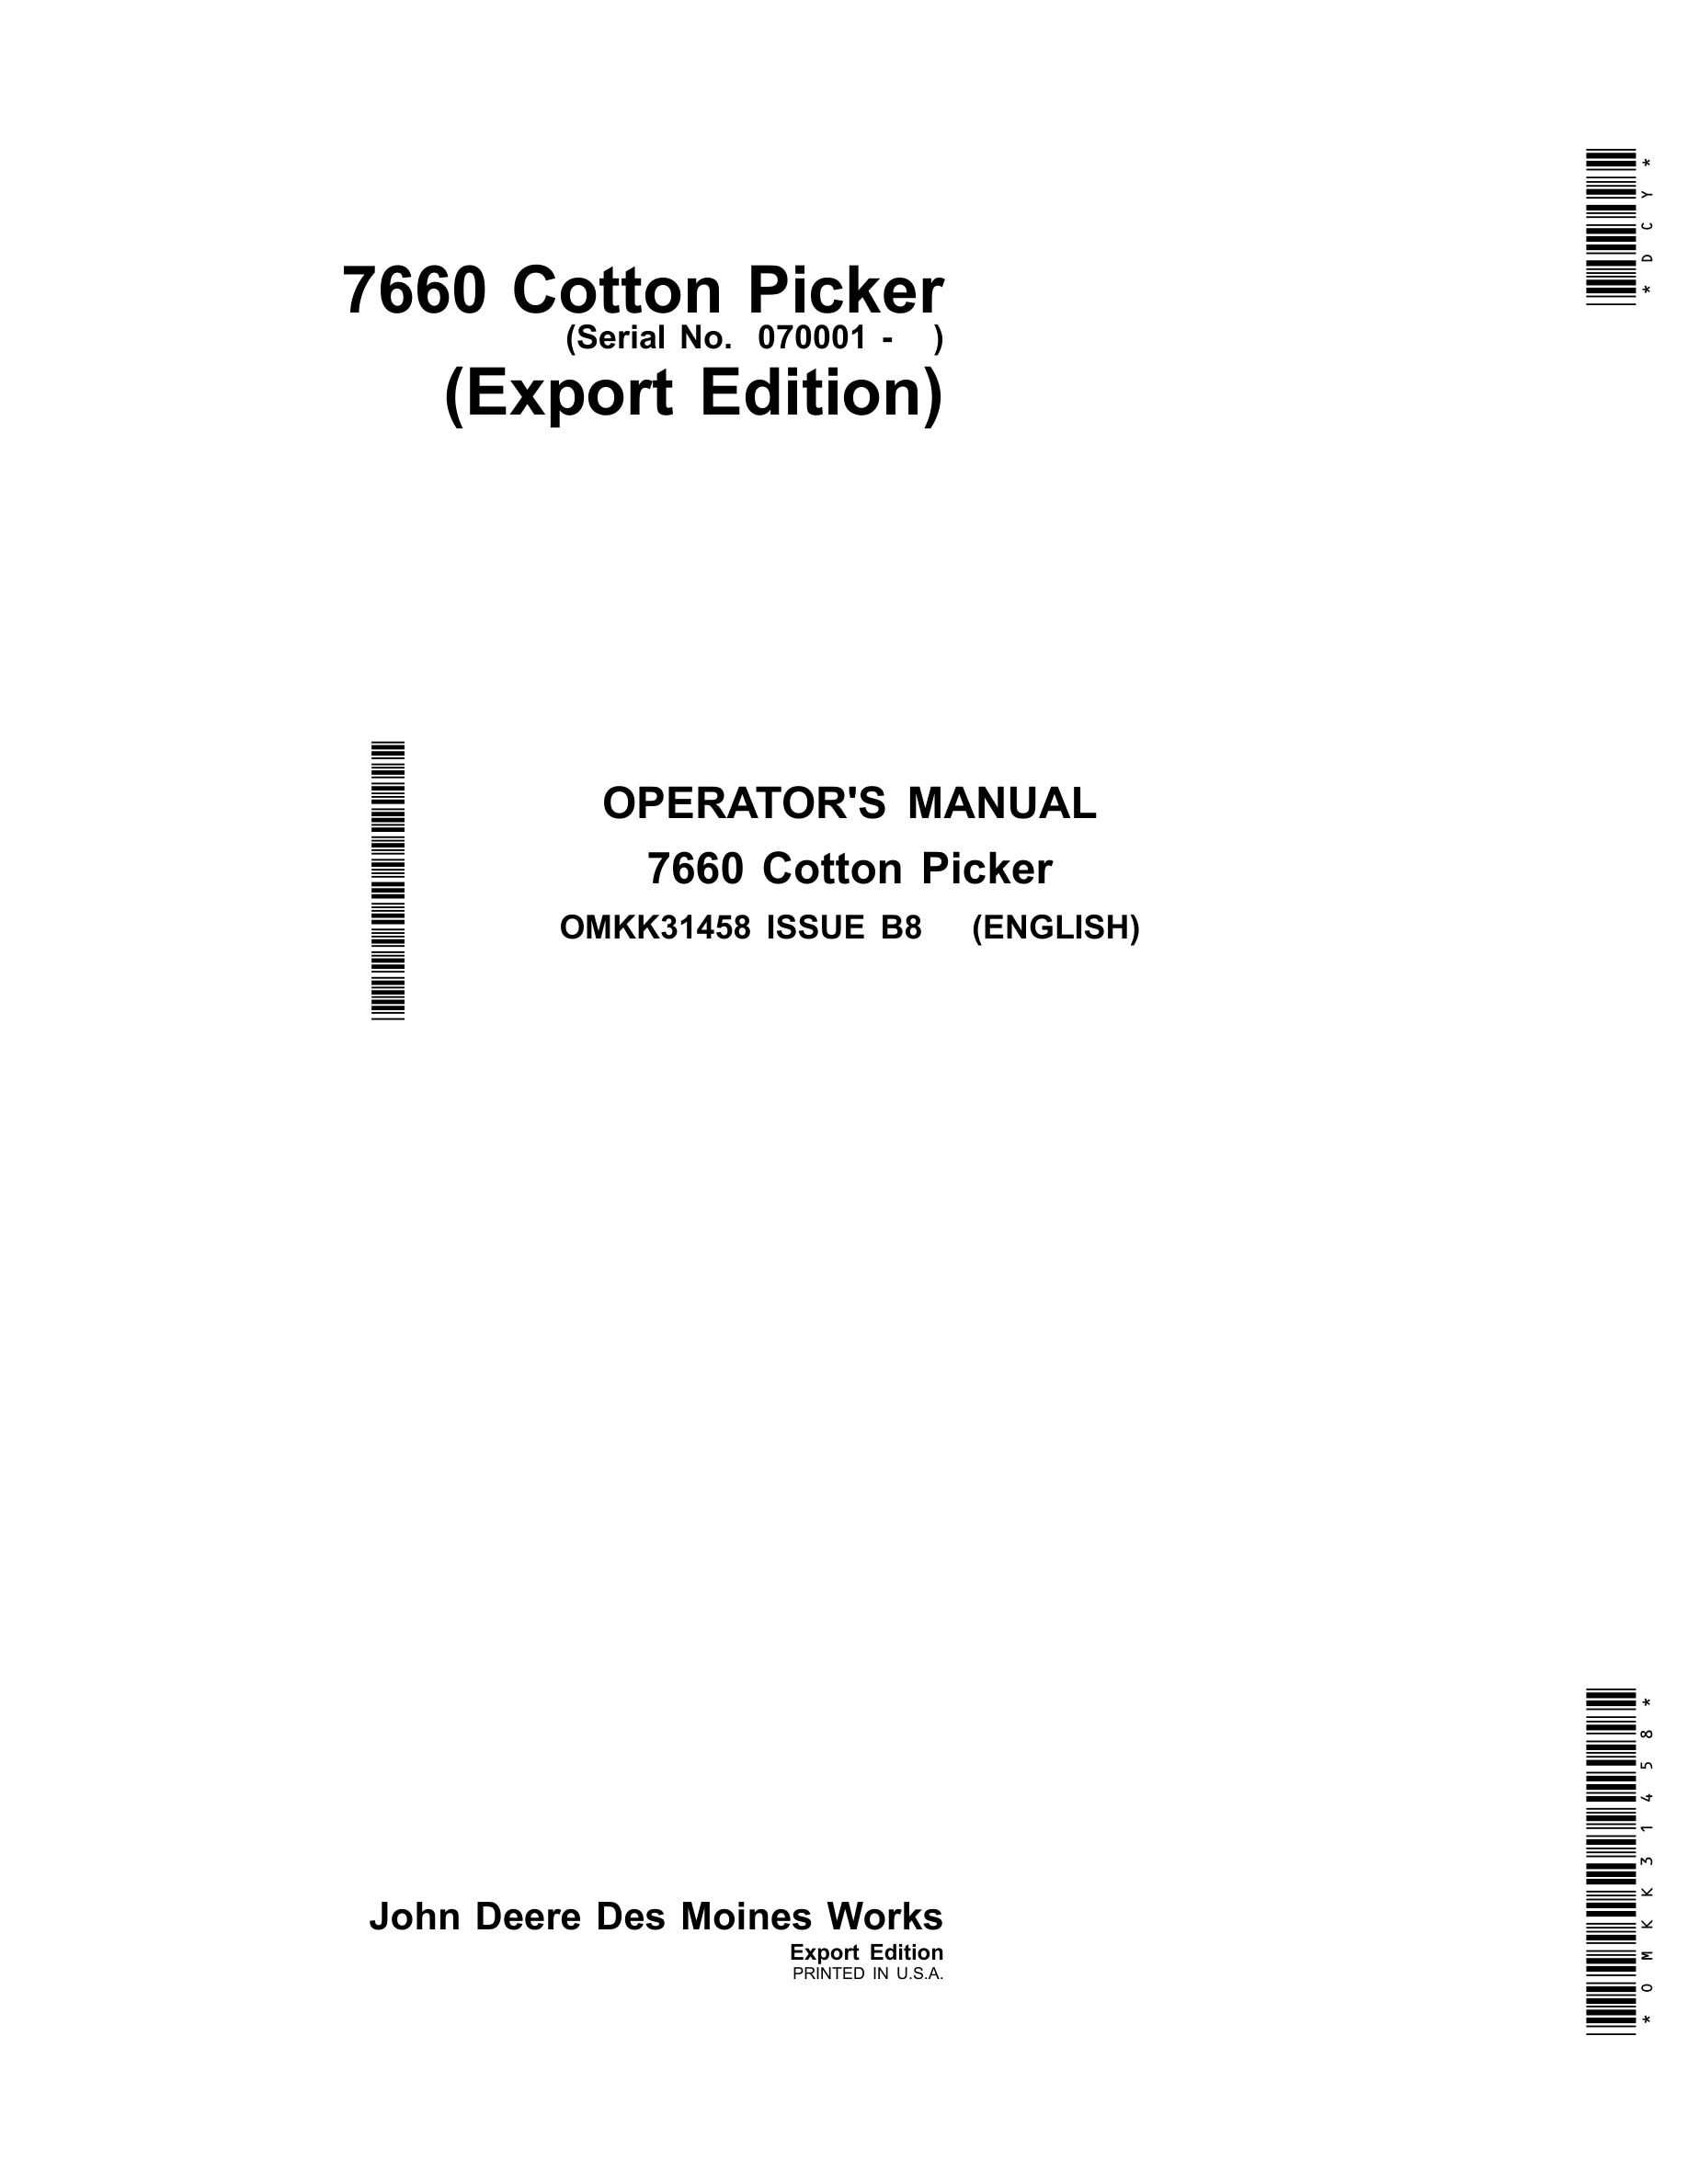 John Deere 7660 Cotton Picker Operator Manual OMKK31458-1